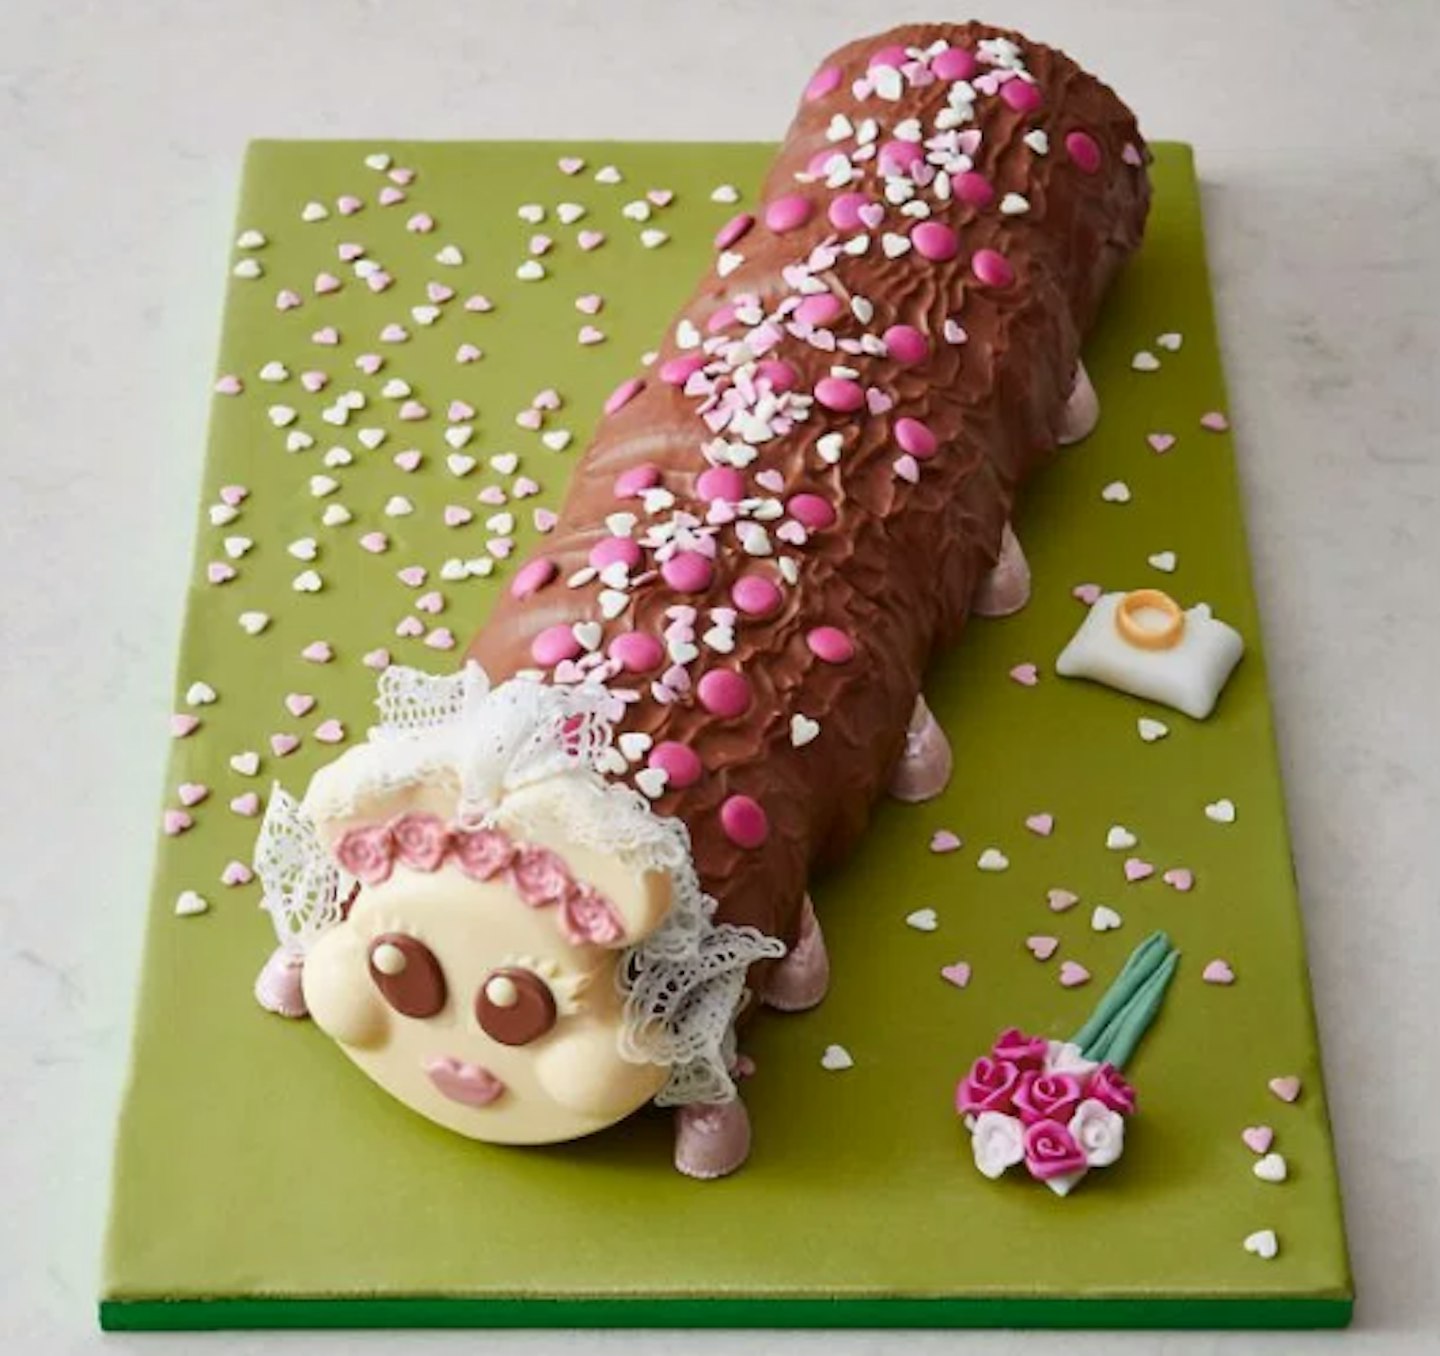 Connie the caterpillar wedding cake